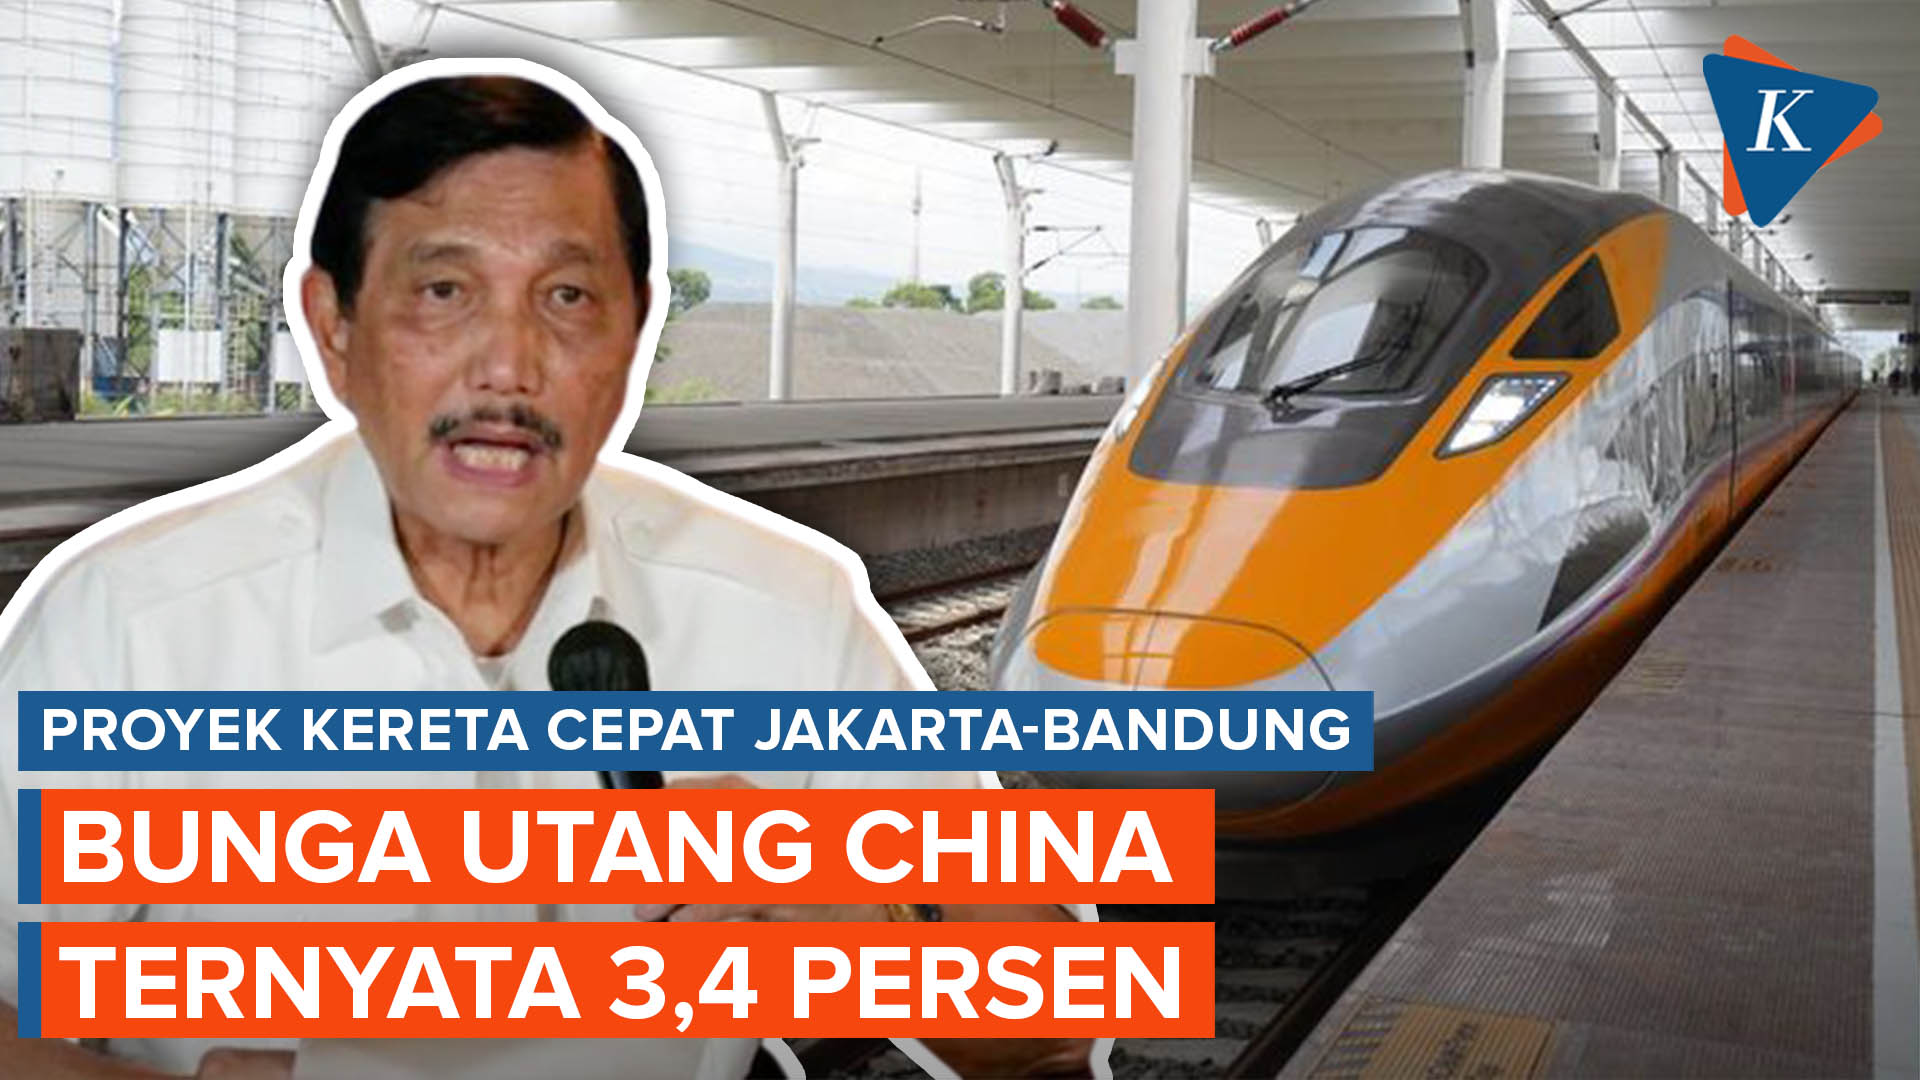 Luhut Buka-bukaan soal Kegagalan Negosiasi Bunga Pinjaman Proyek Kereta Cepat Jakarta-Bandung